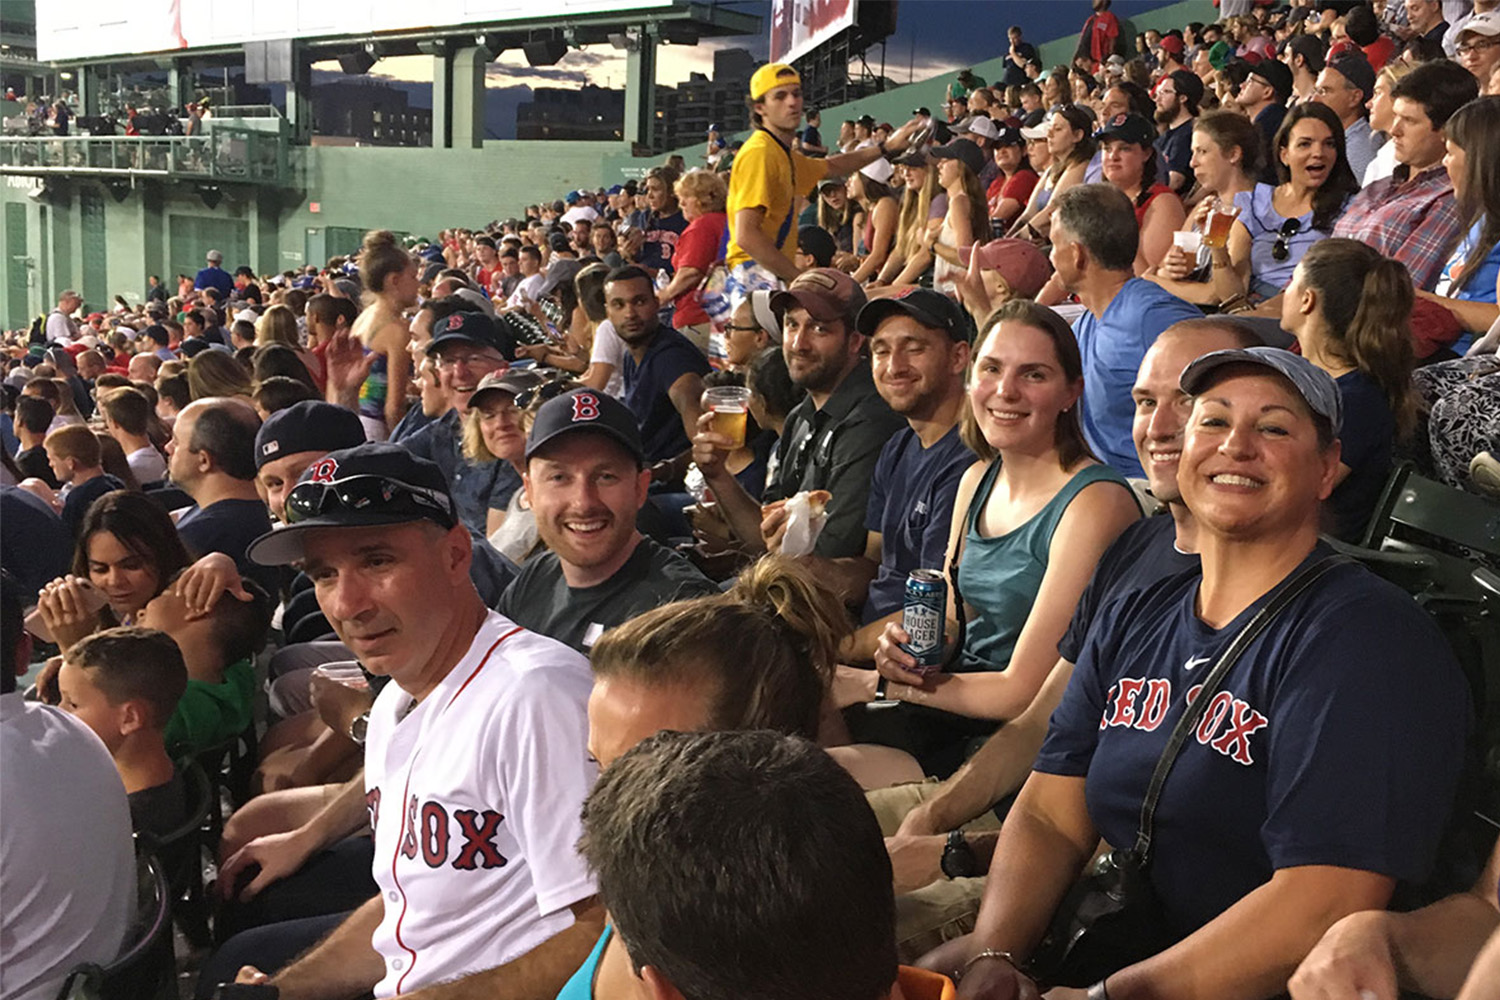 Joe Cavallaro, Tammi Gott, and other staff enjoy a RedSox baseball game